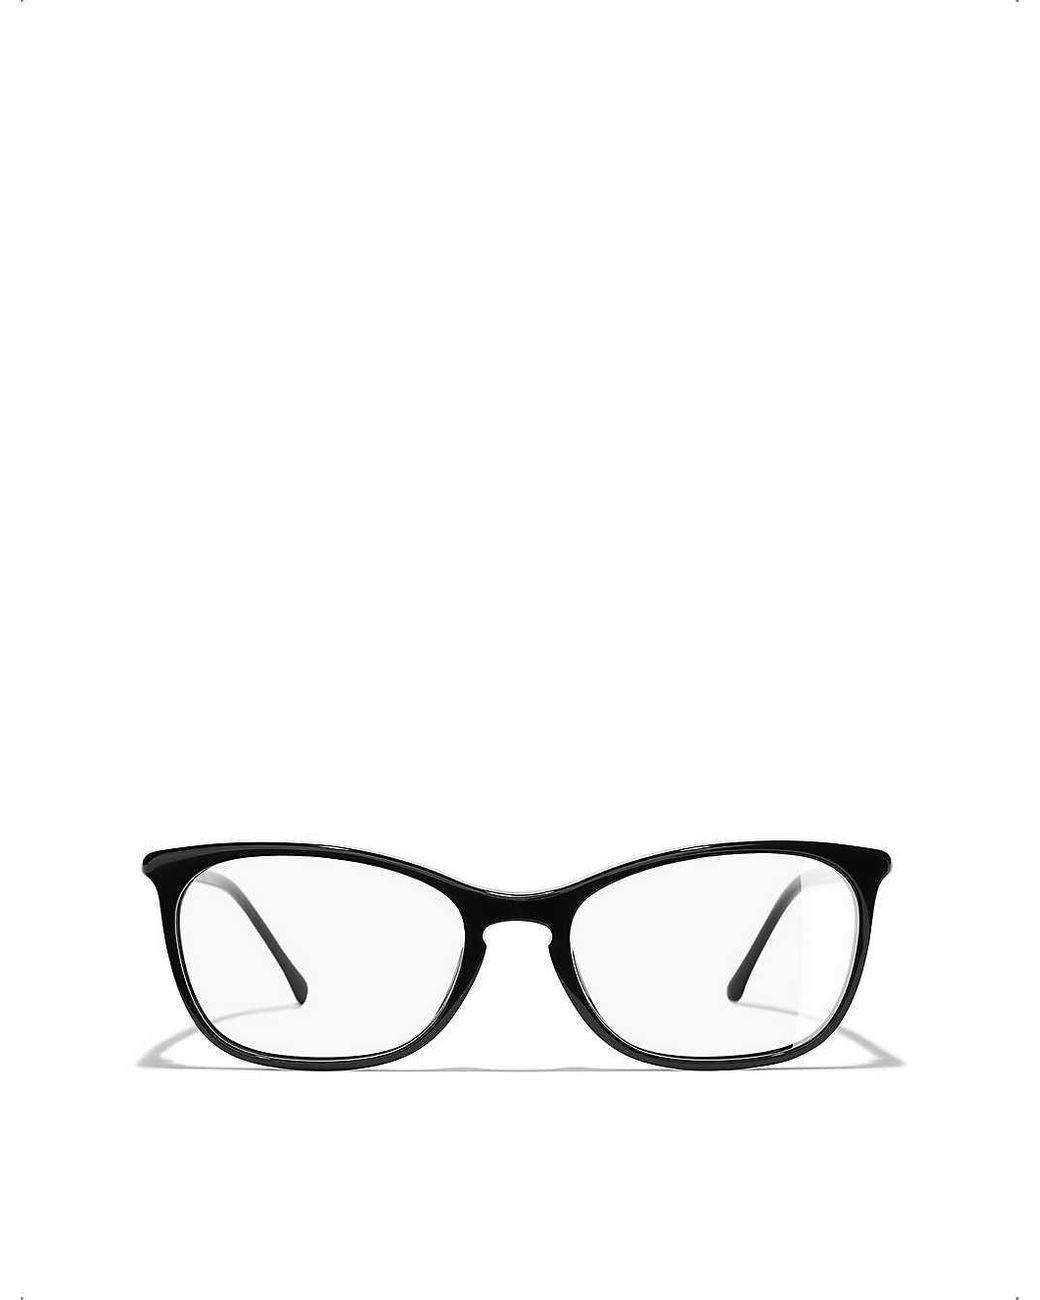 Chanel Rectangle Eyeglasses in Black